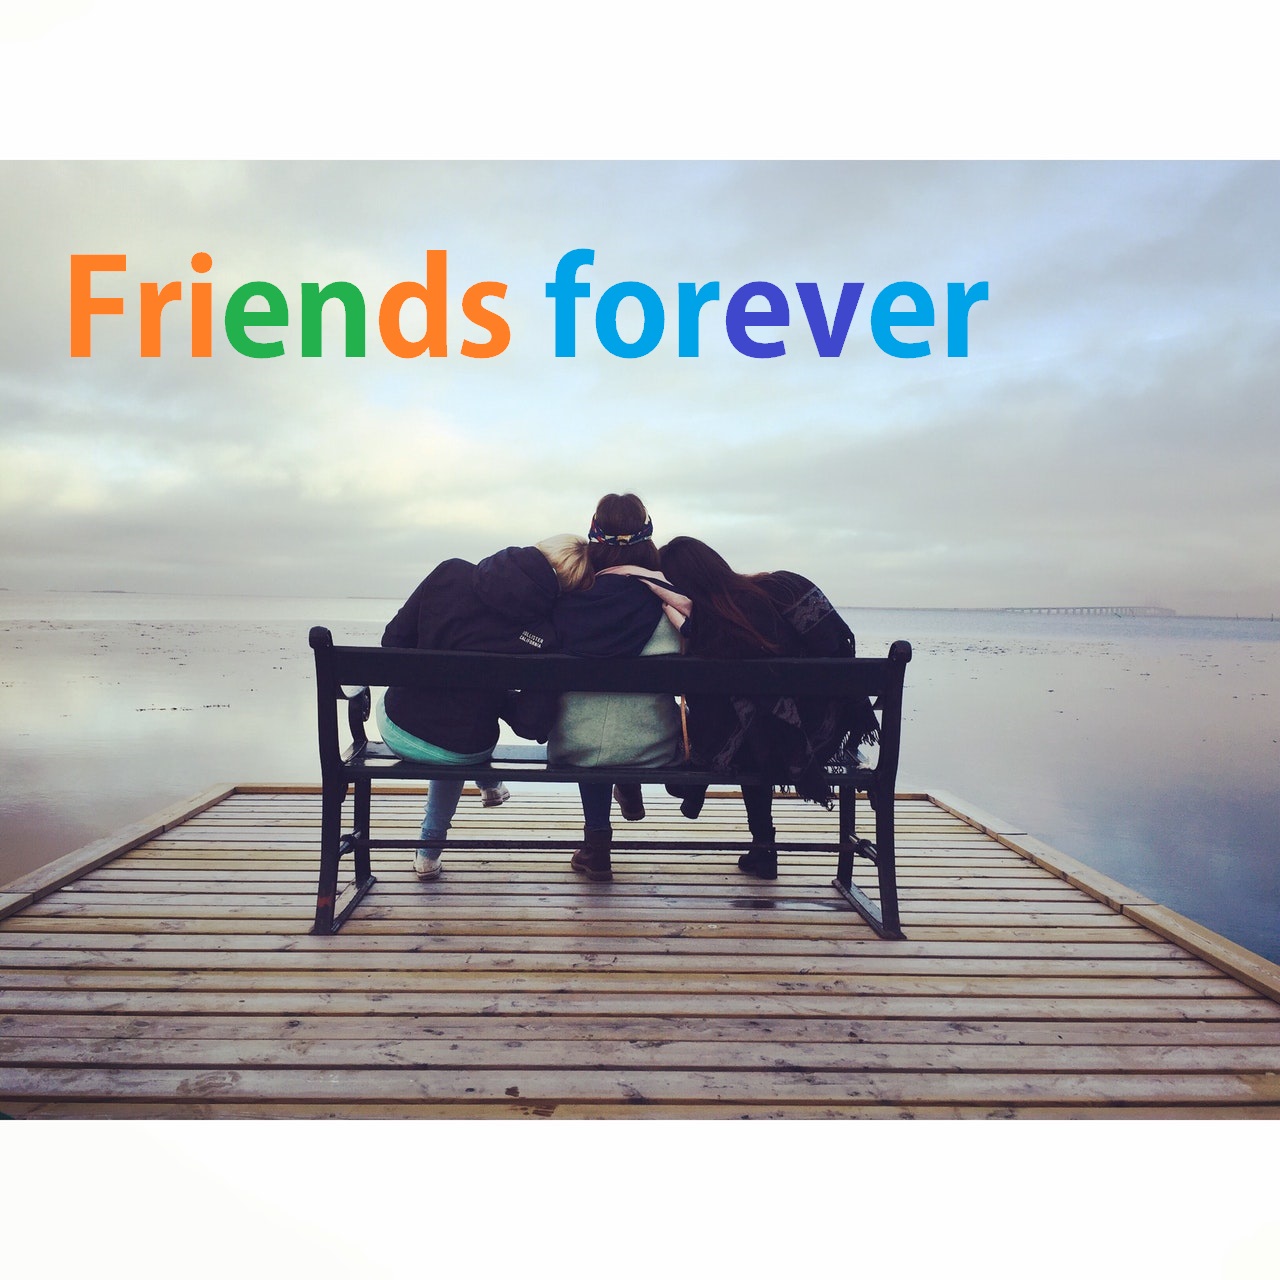 Best Friends Forever Images For Whatsapp Dp Shop - benim.k12.tr ...